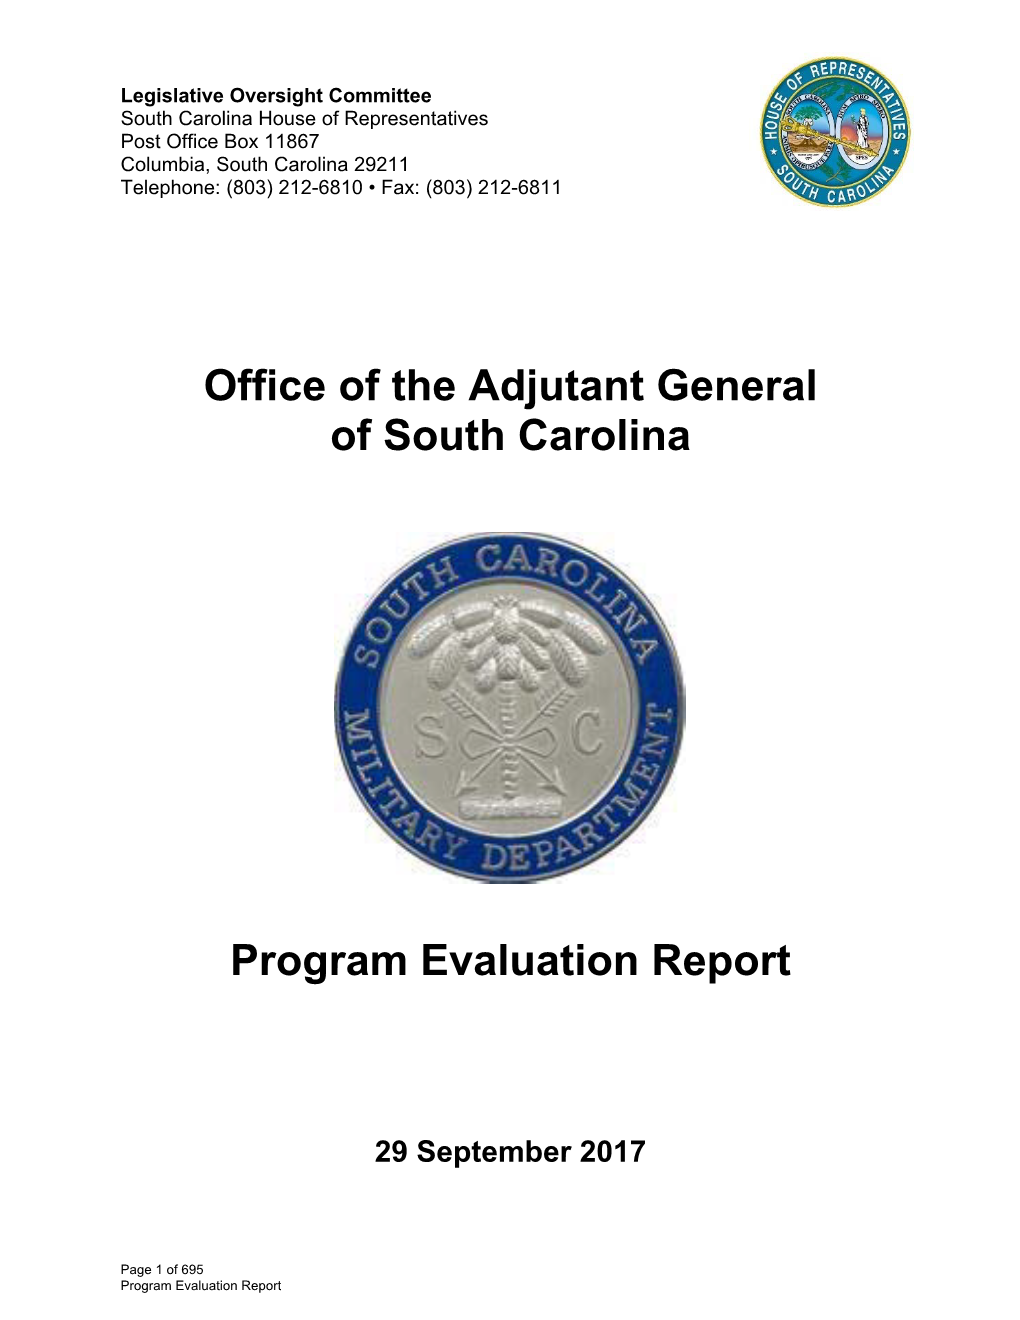 Office of the Adjutant General of South Carolina Program Evaluation Report